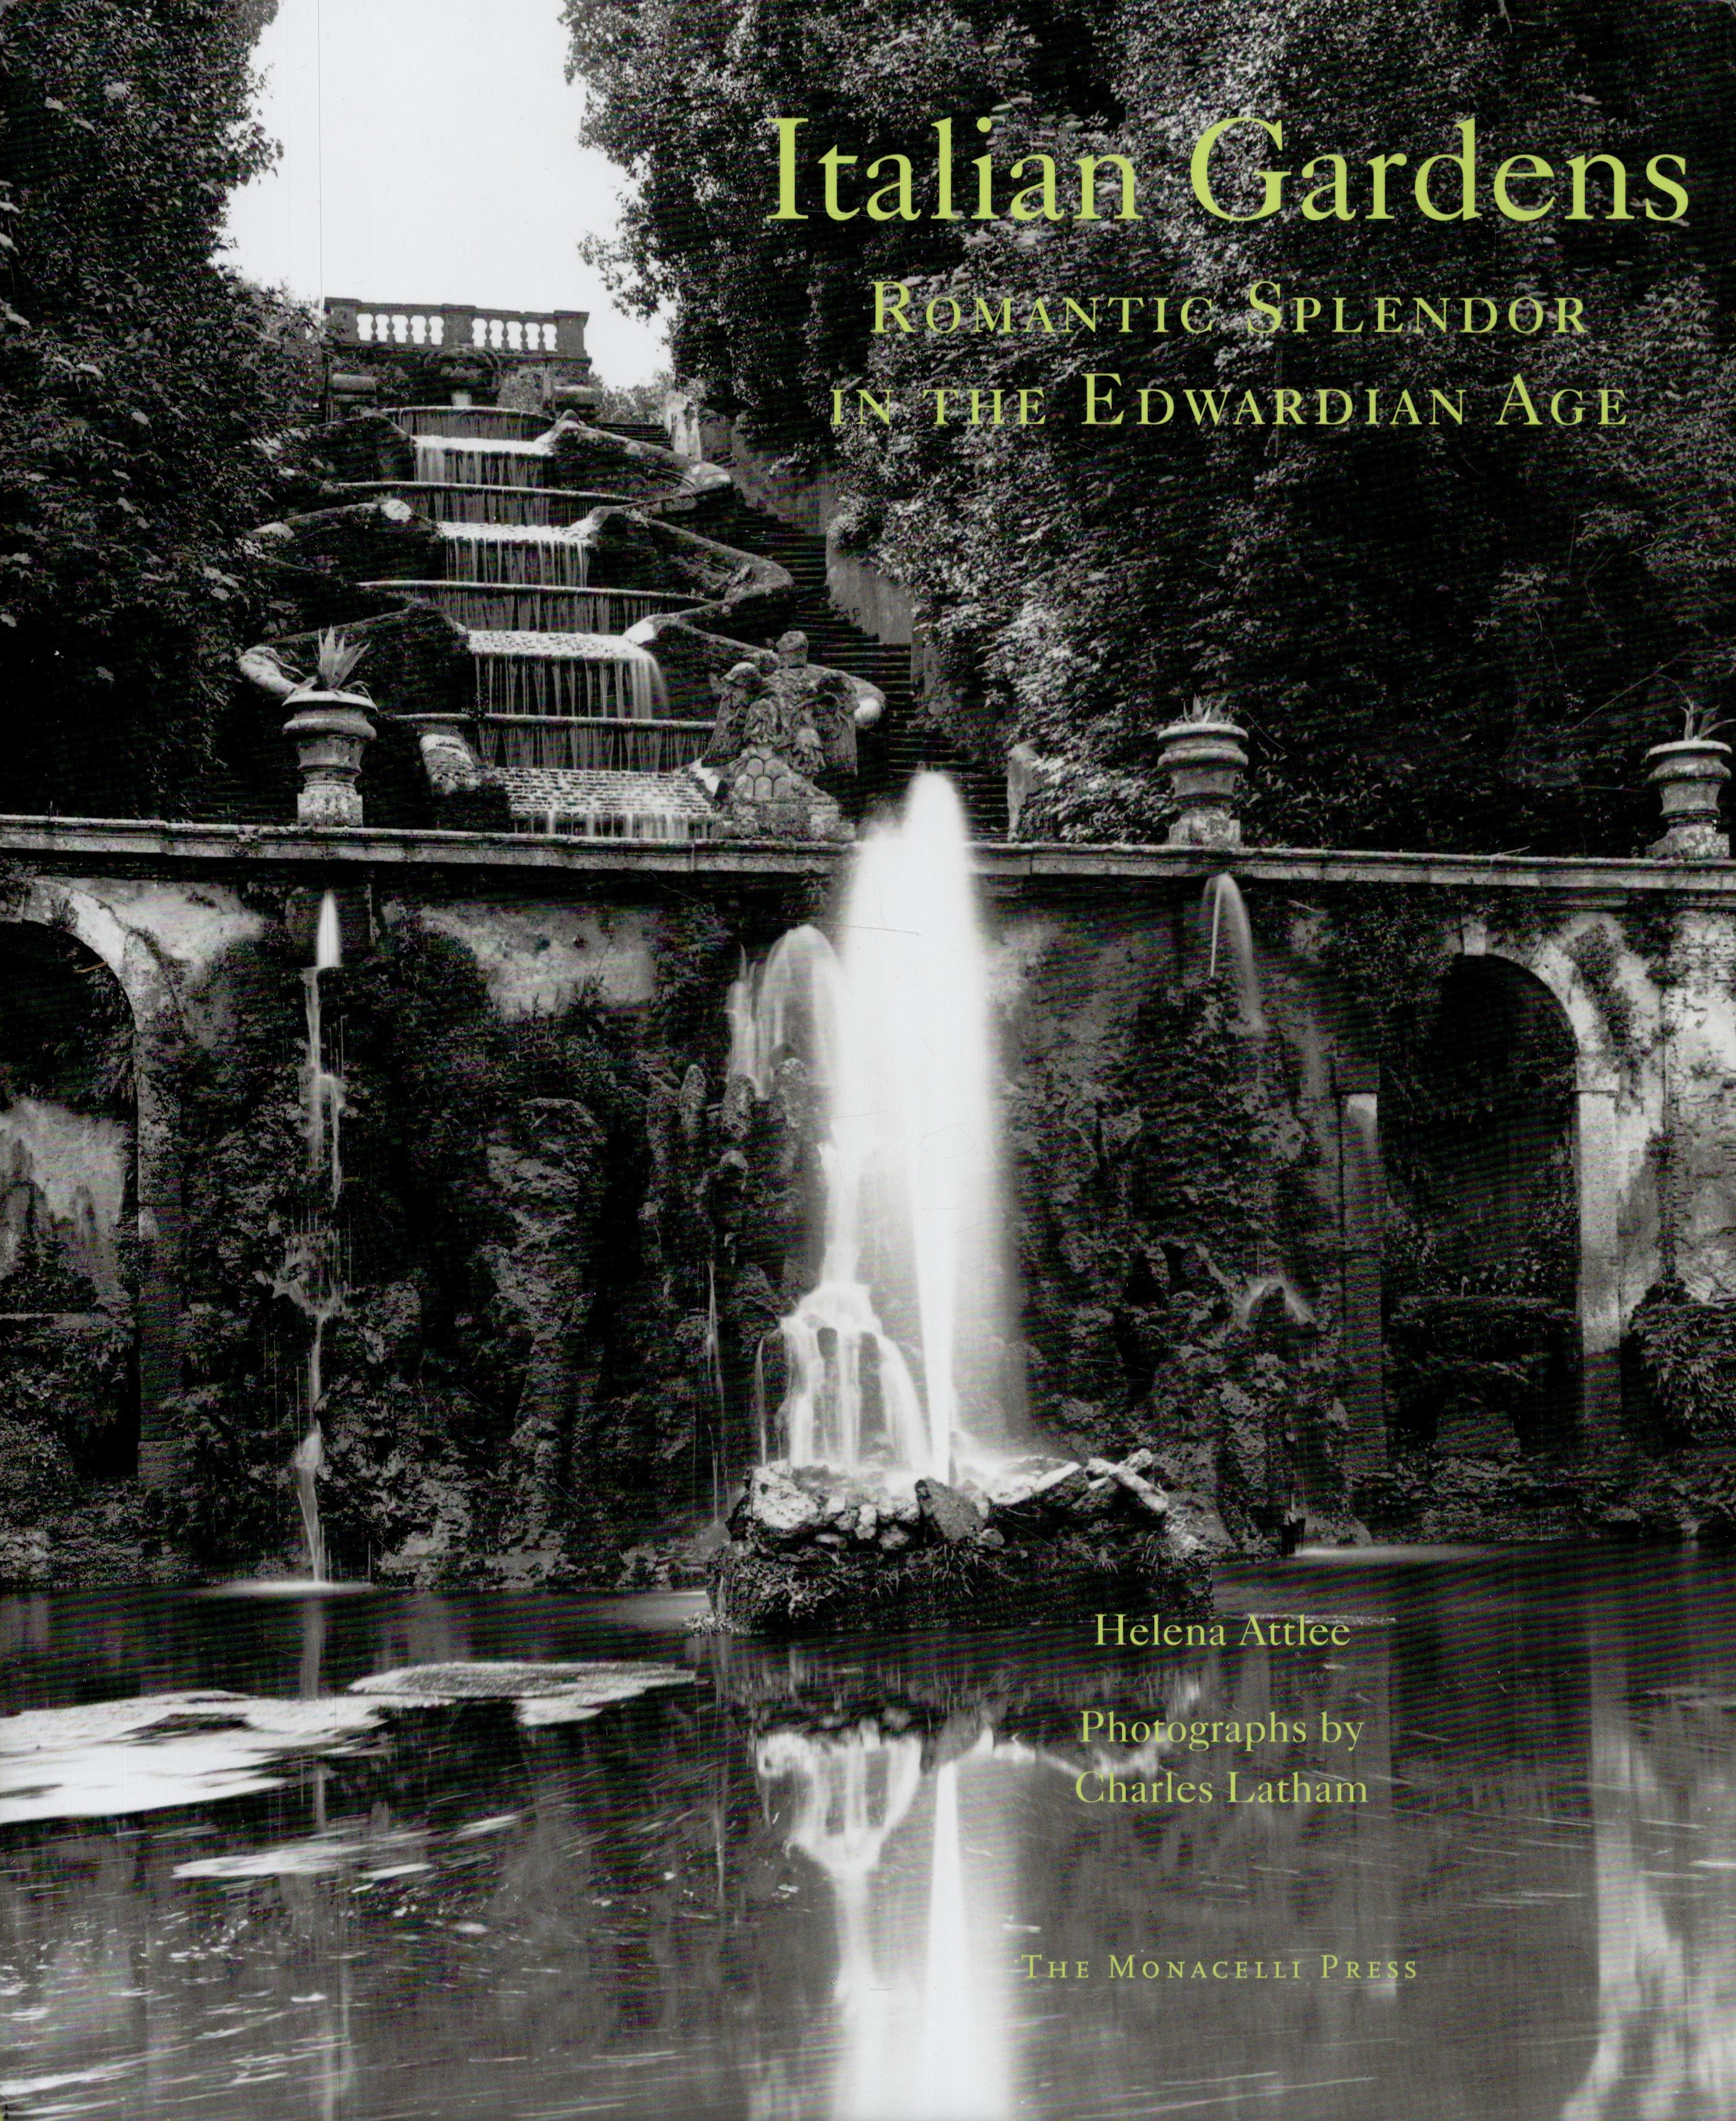 Italian Gardens - Romantic Splendor in the Edwardian Age by Helena Latham 2009 First Edition